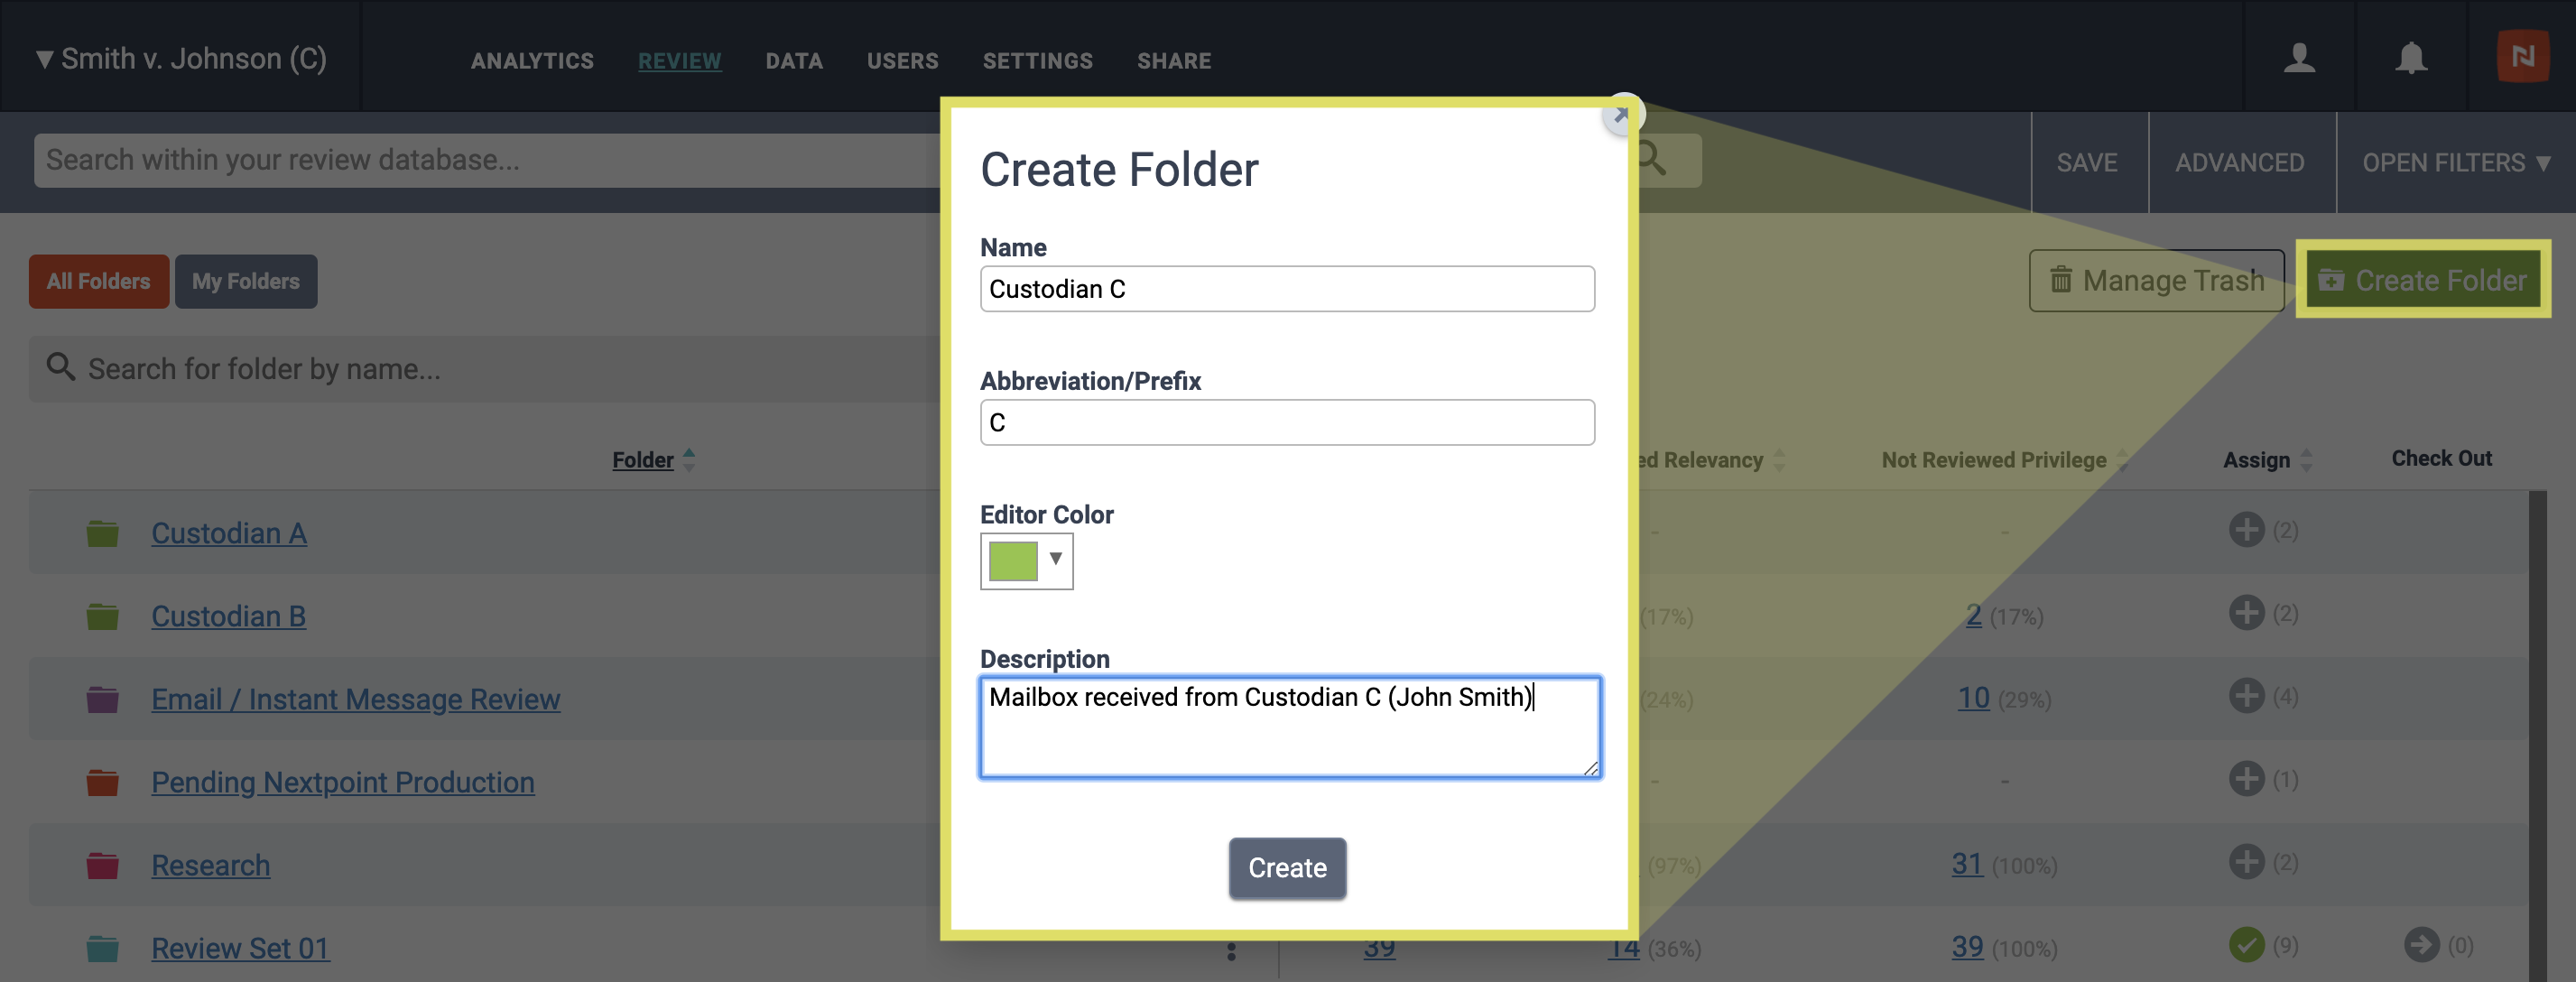 Folders_Review_Create_Folder.png